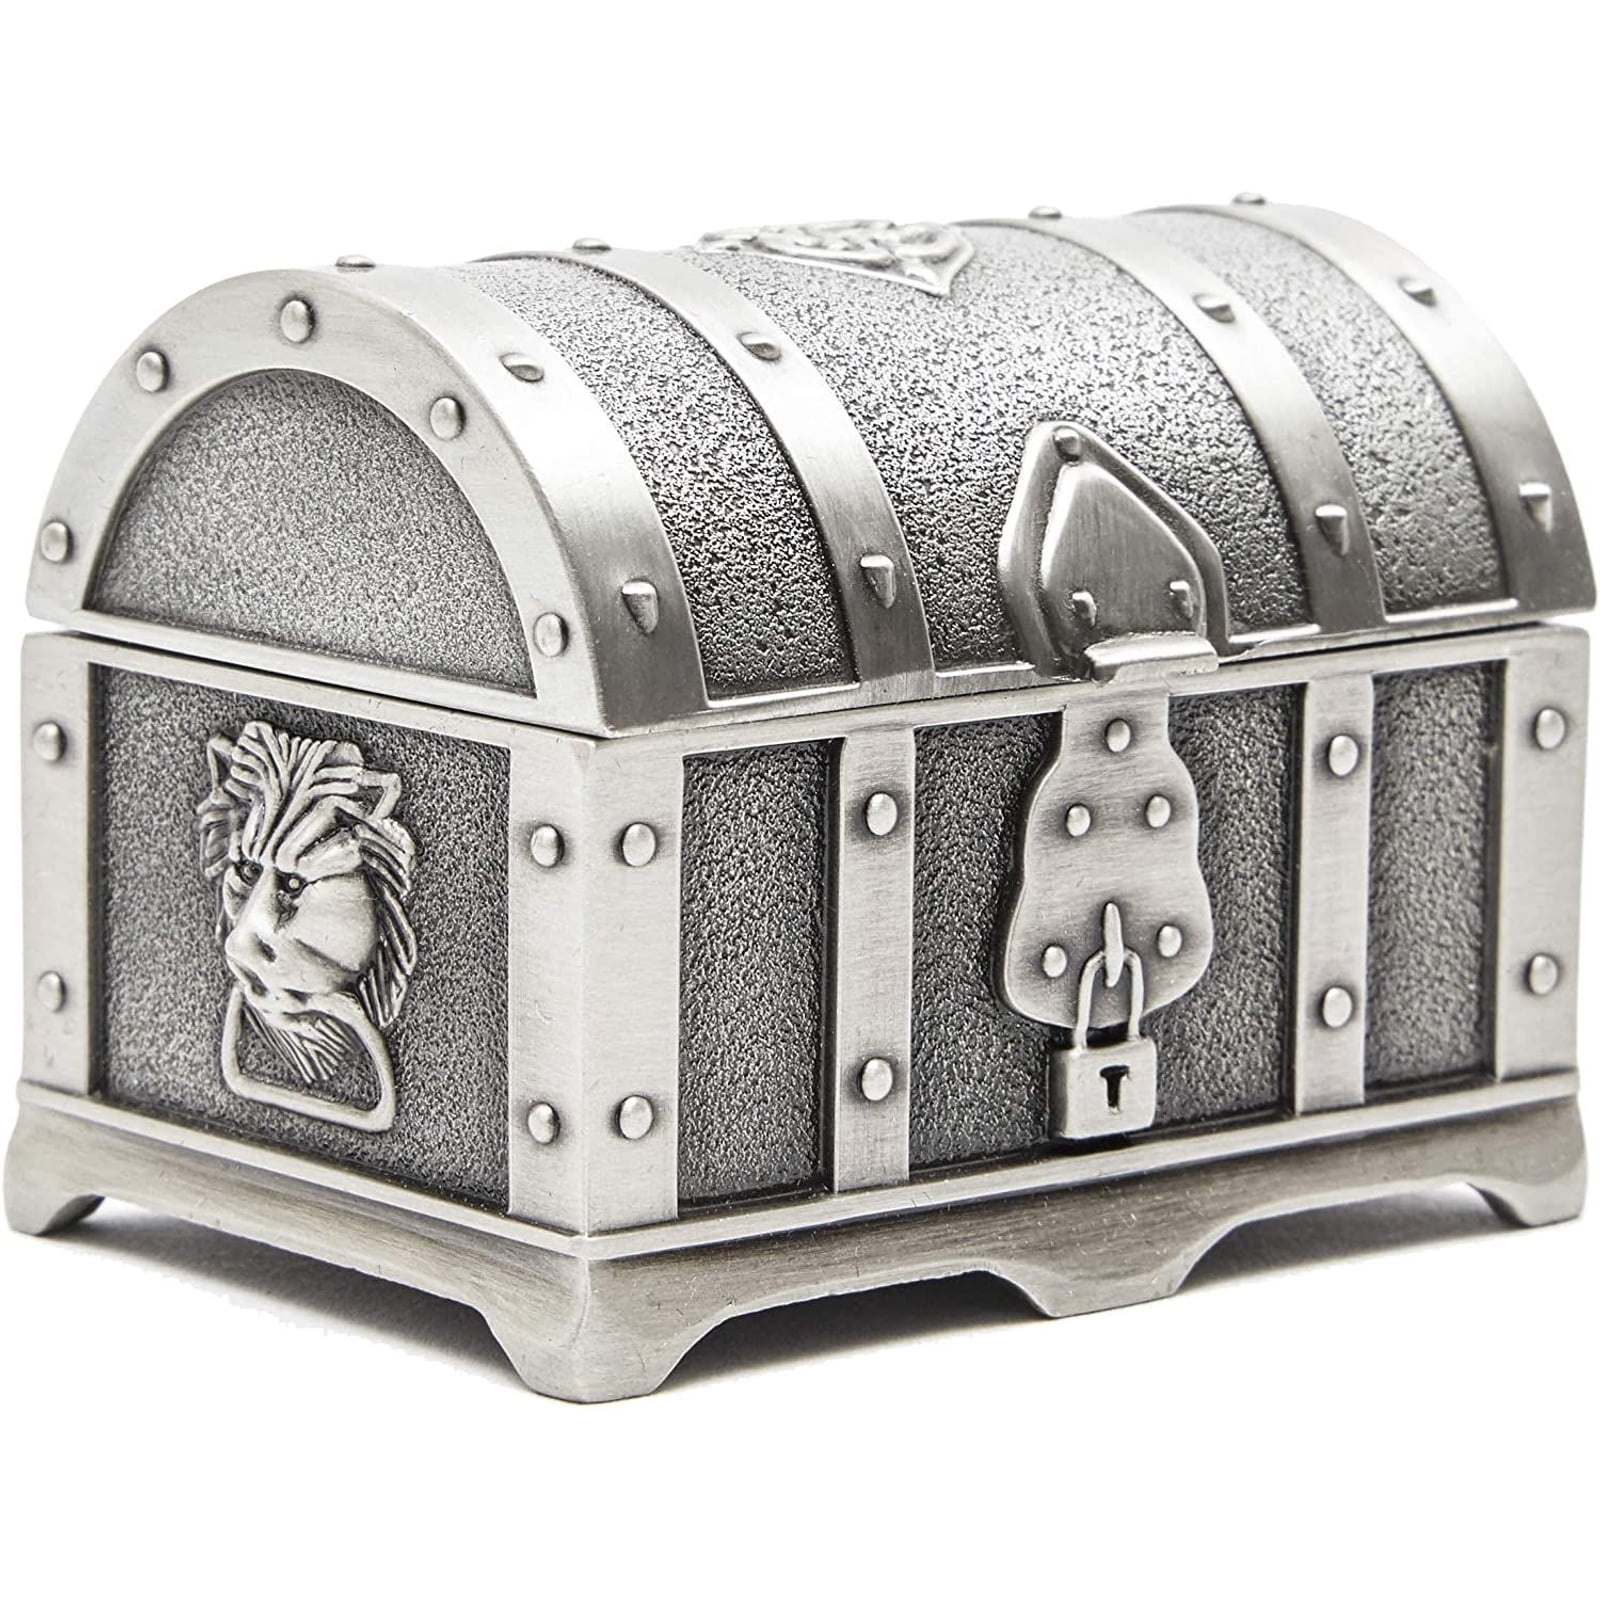 trinket box Vintage decorative storage box wooden treasure box Gift box. Jewelry chest Silver tool chest small storage chest